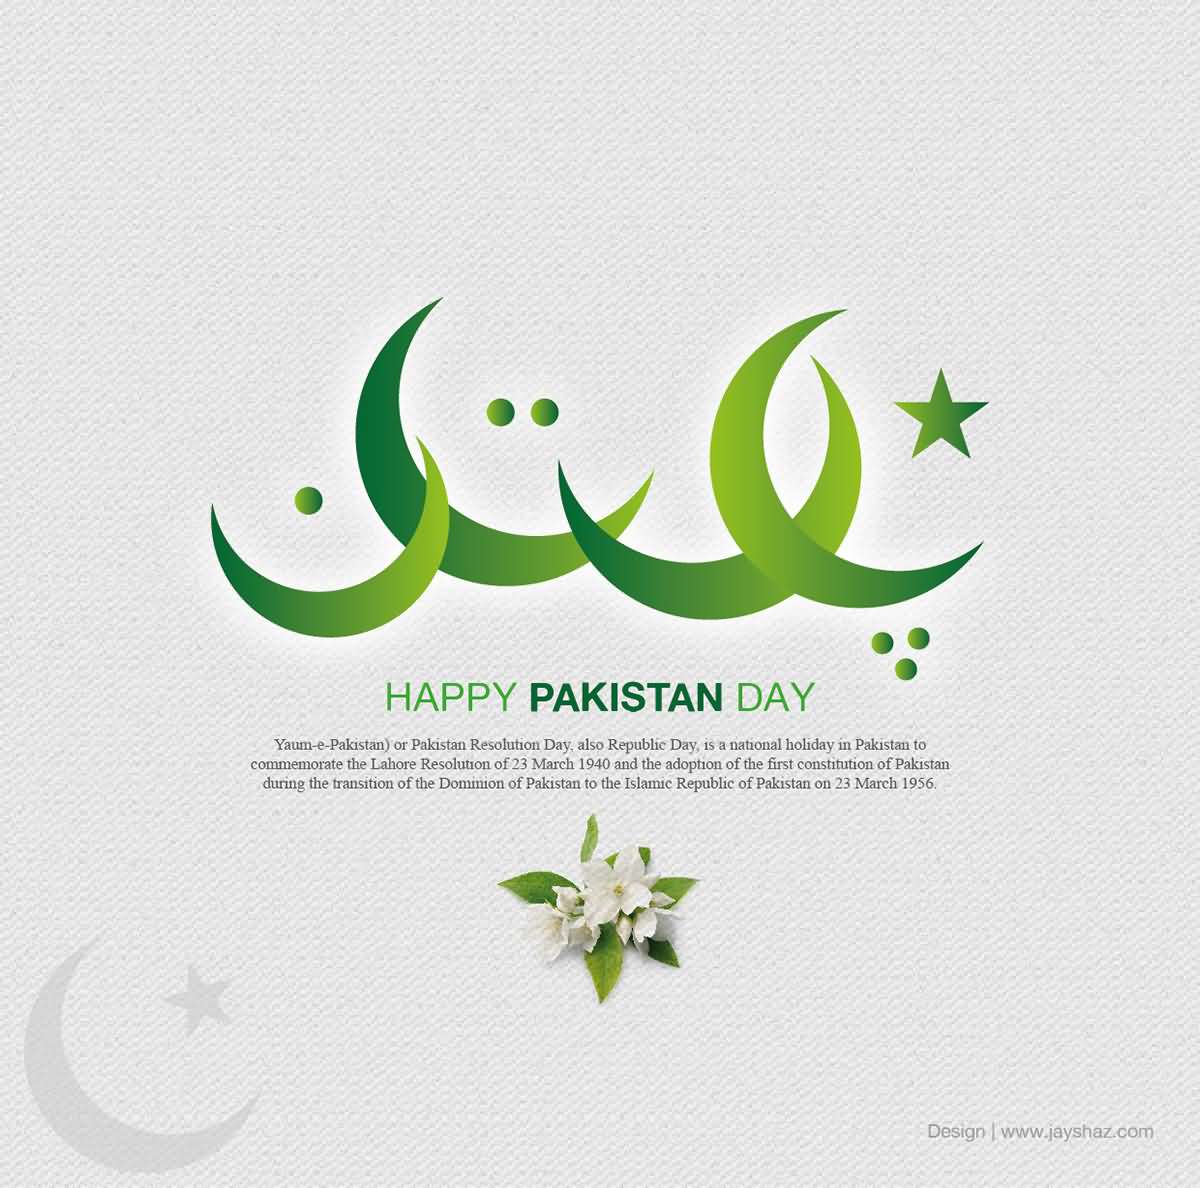 Happy Pakistan day wishes card